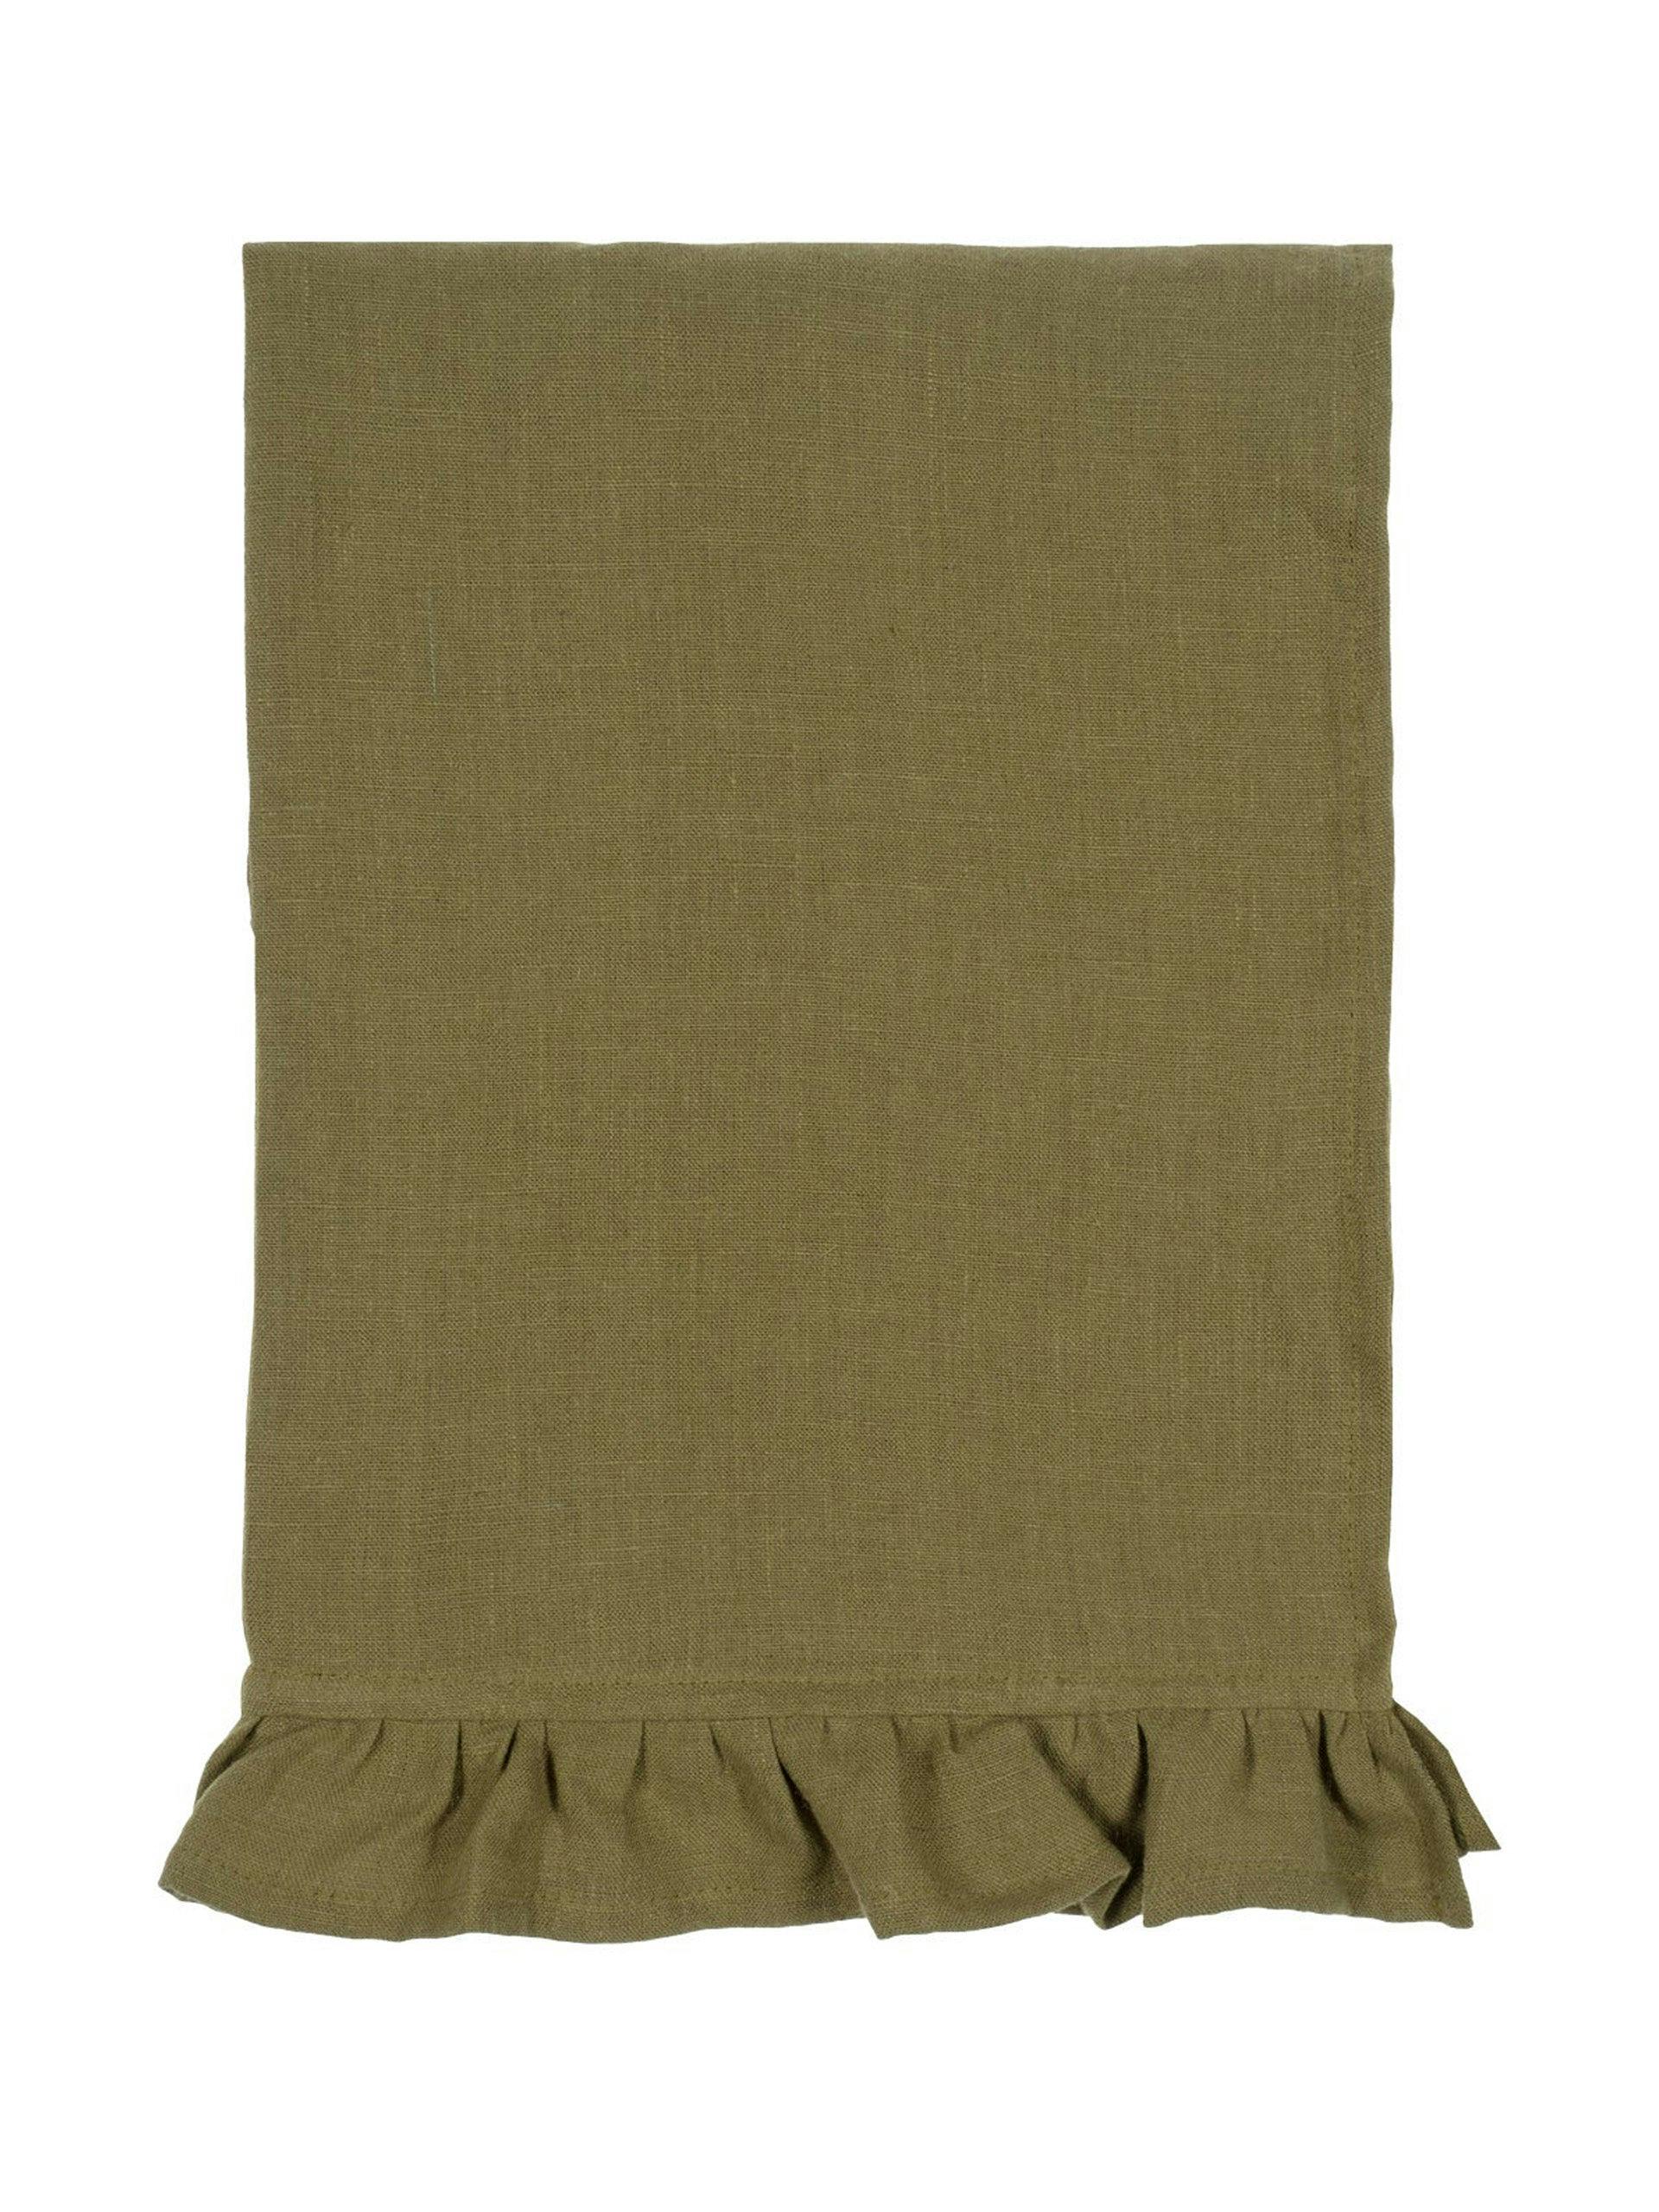 Khaki ruffled linen tea towel